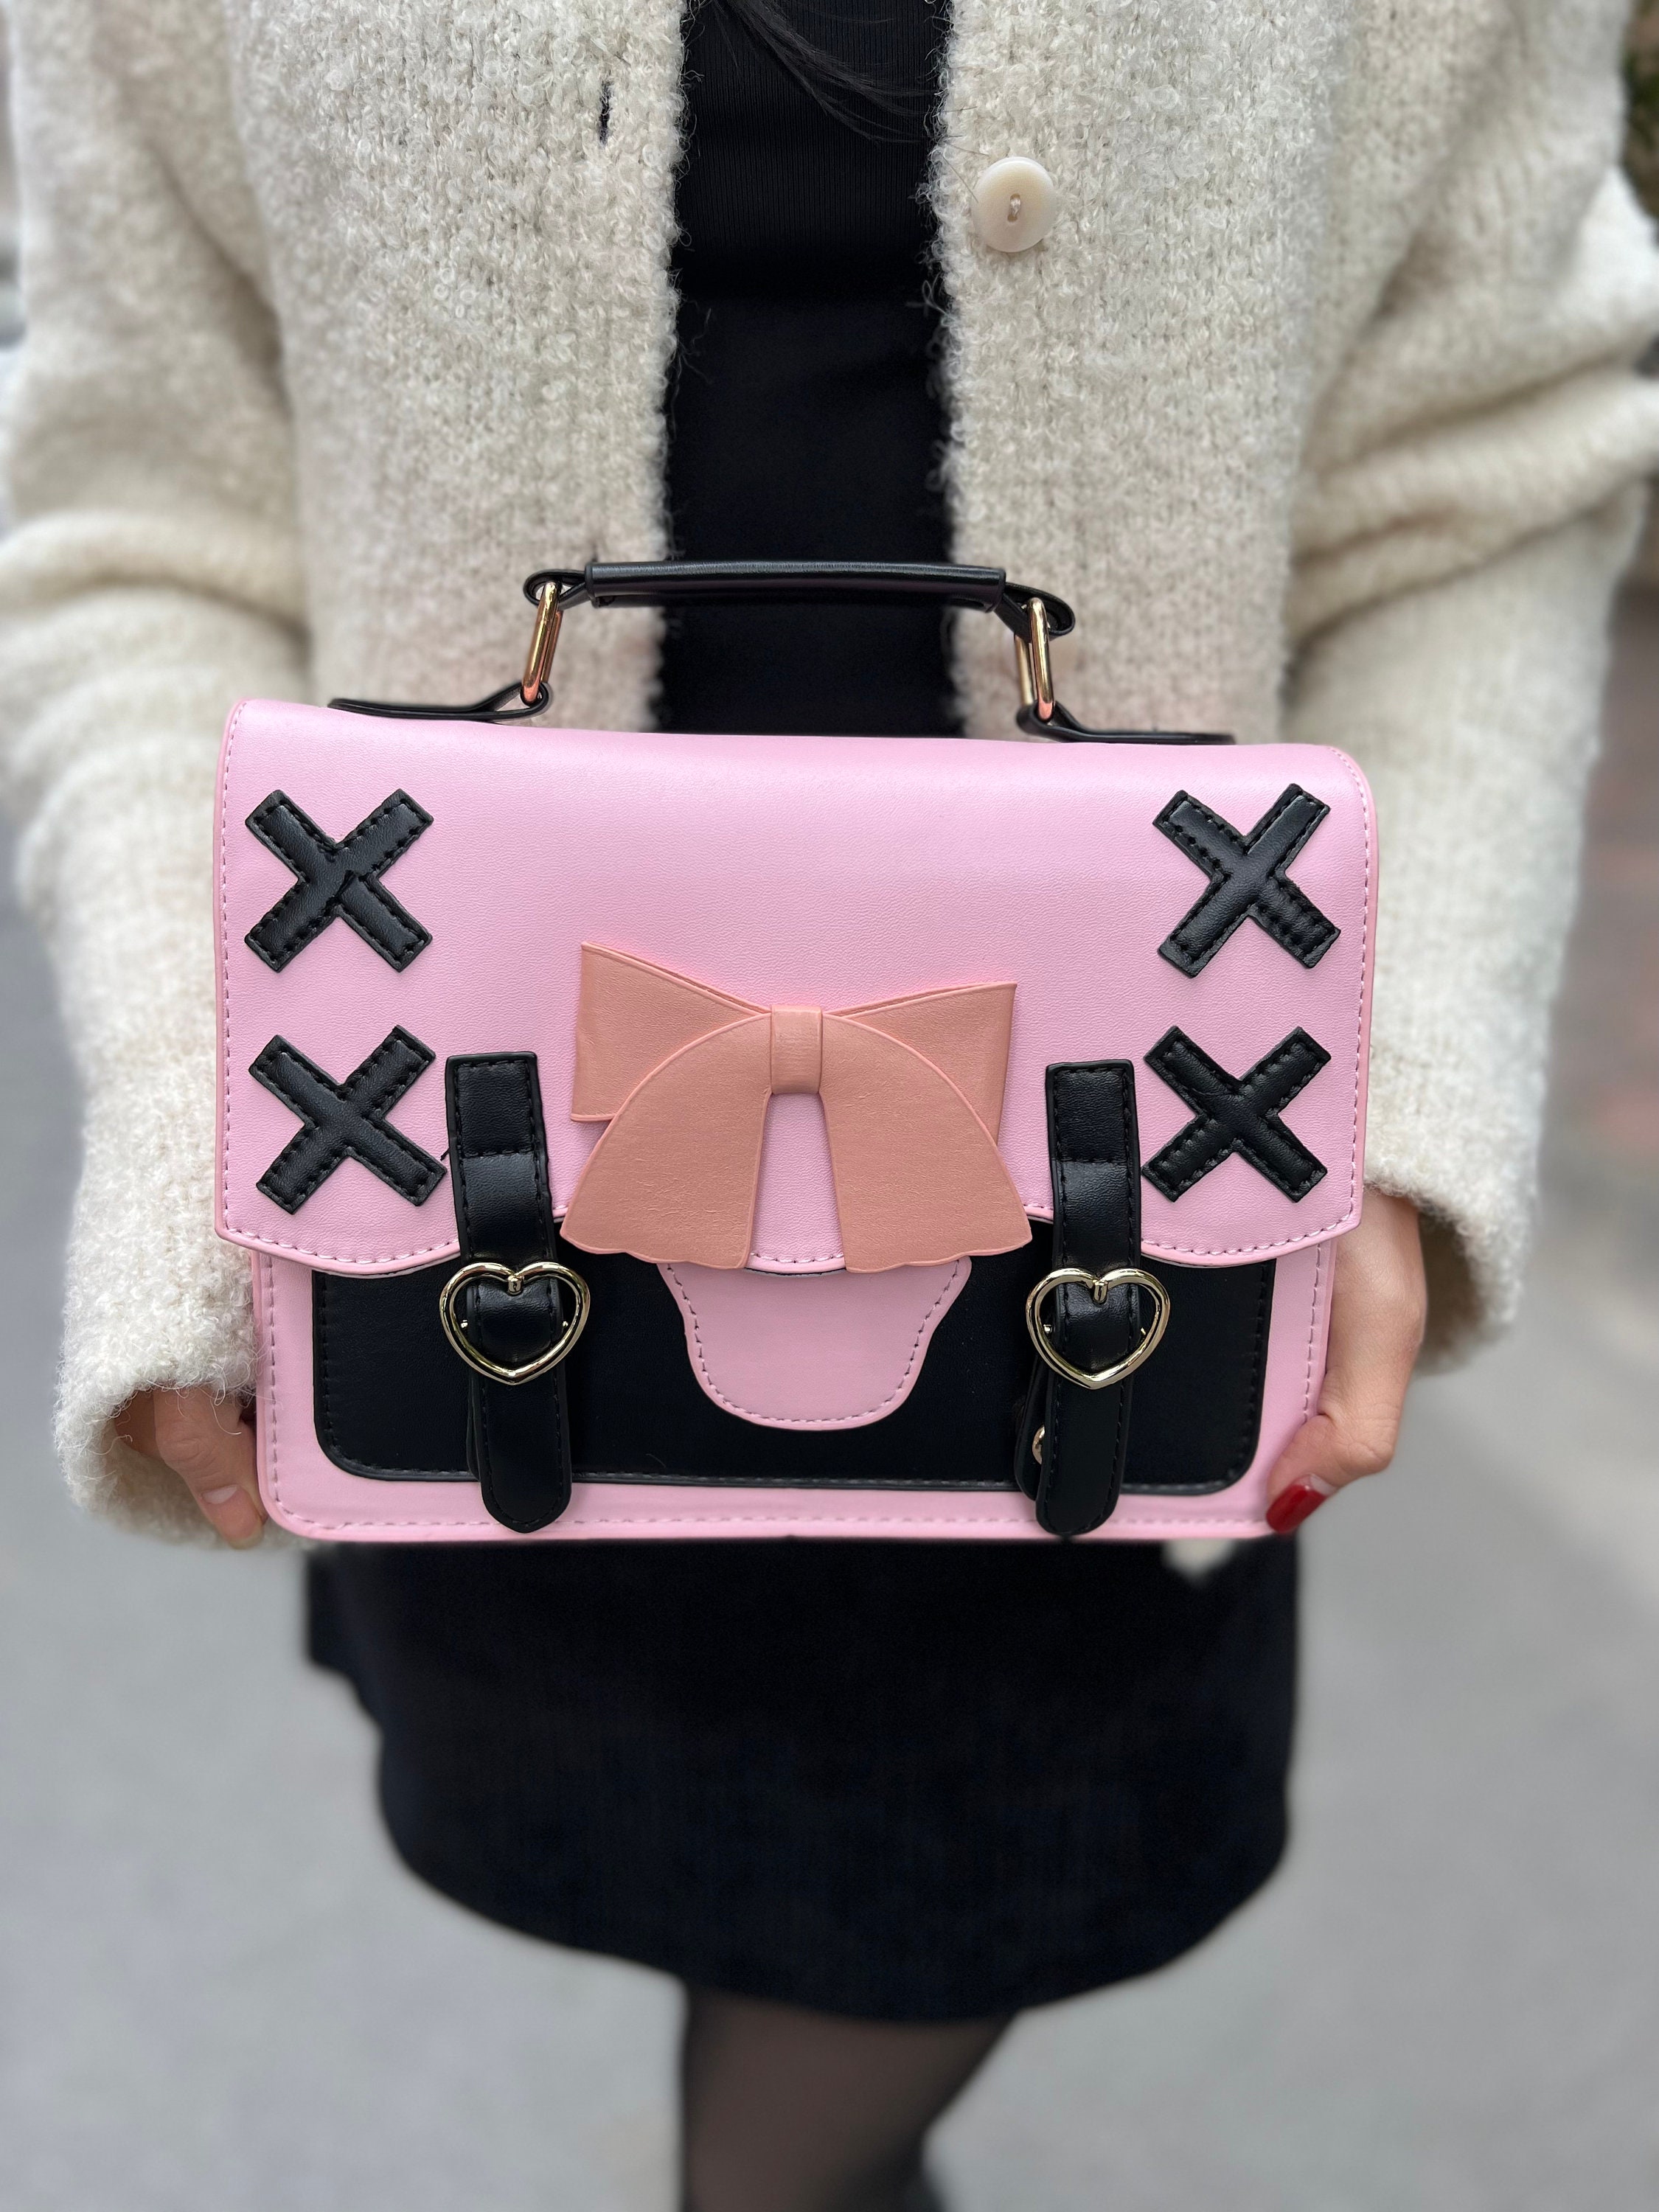 ToAlice Bear Bag - Bags and Purses - Lace Market: Lolita Fashion Sales